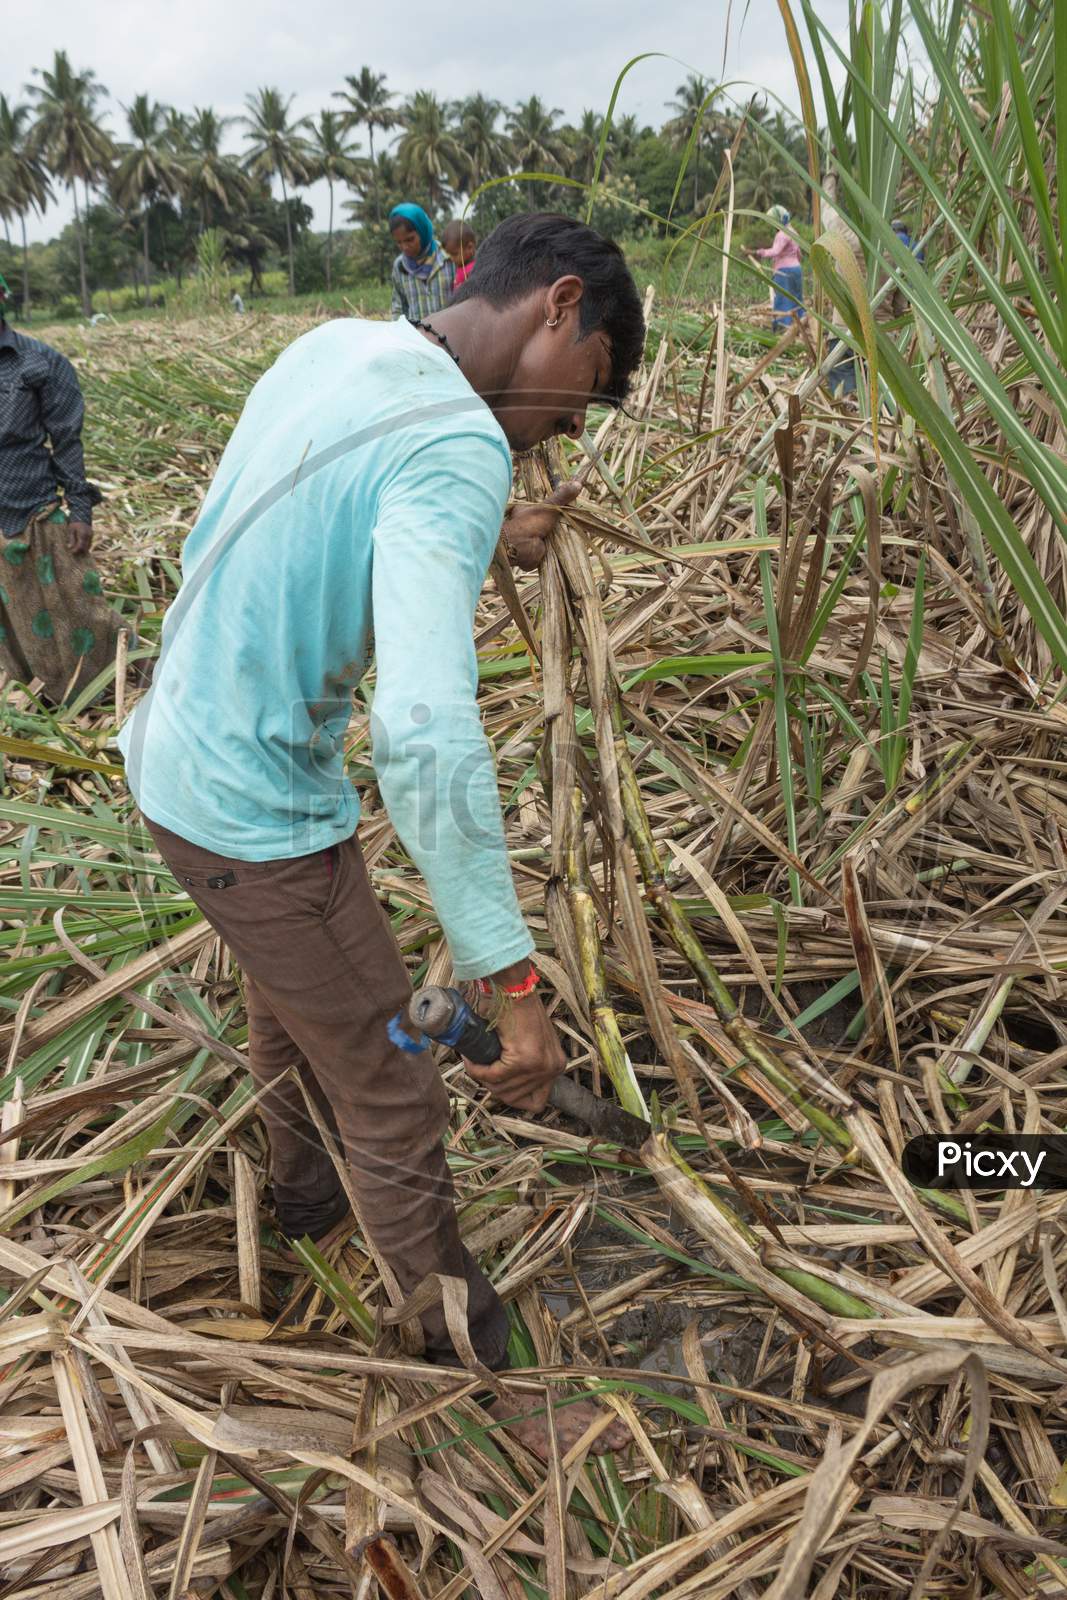 An Young labor seen at the Sugarcane fields cutting the ripened cane stem in a farm near Mysuru in Karnataka state of India.